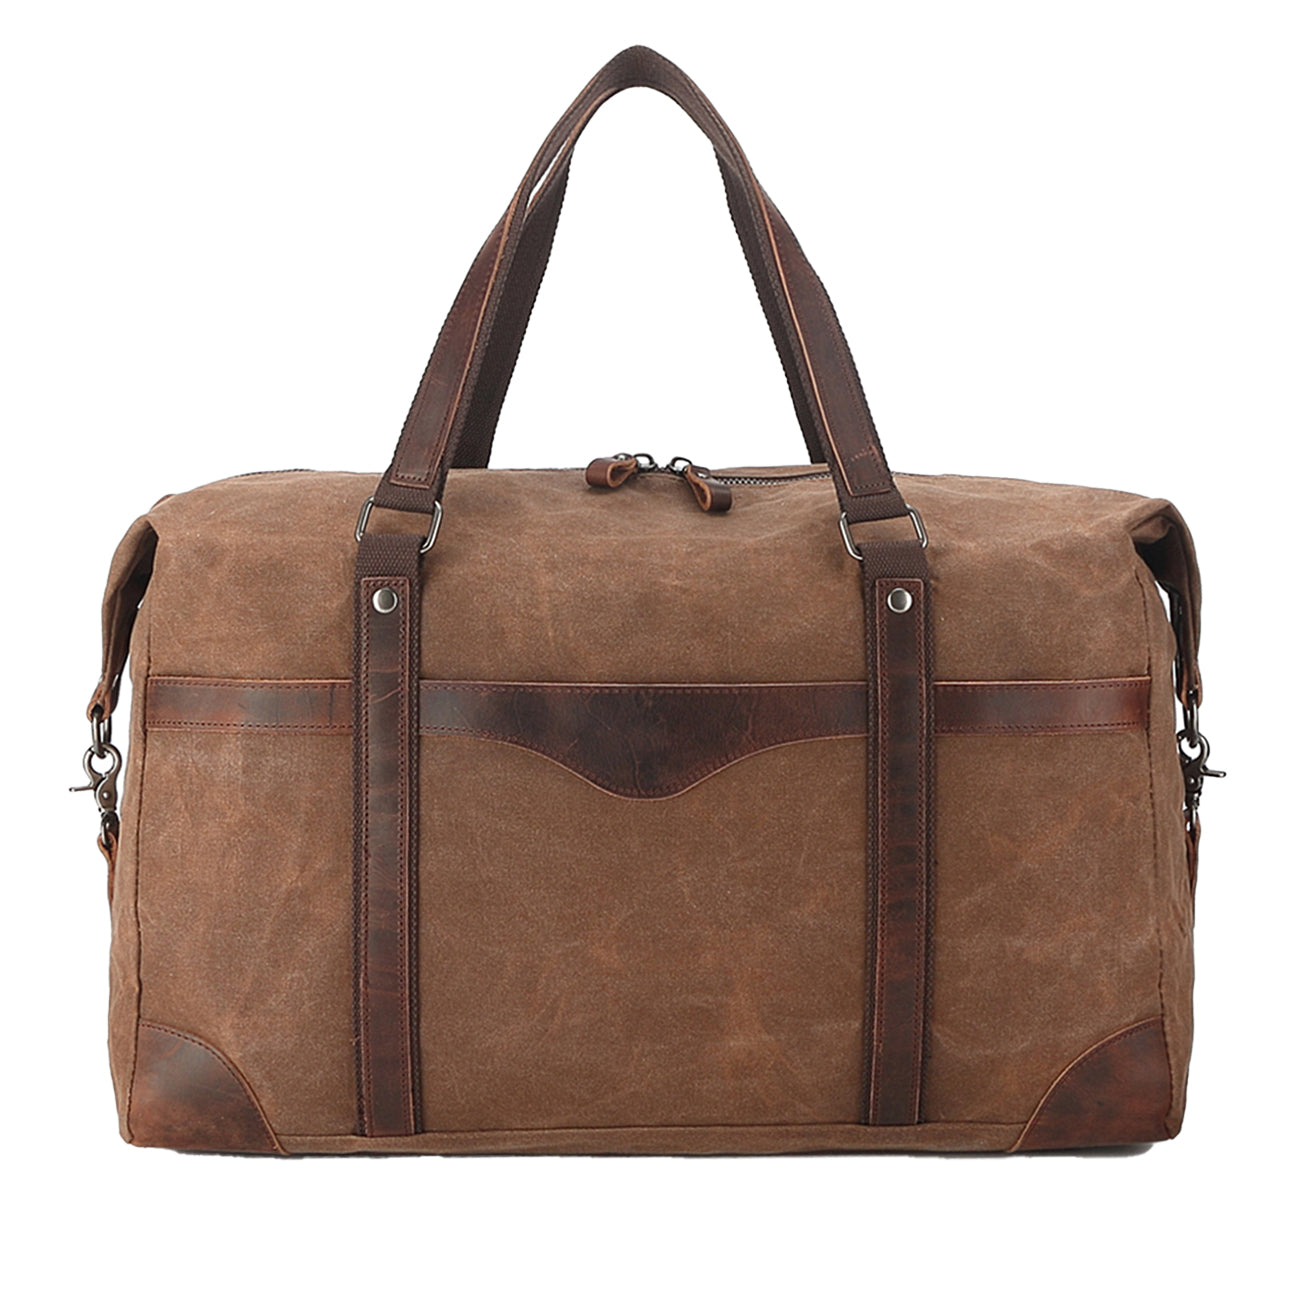 sac voyage vintage marron avant